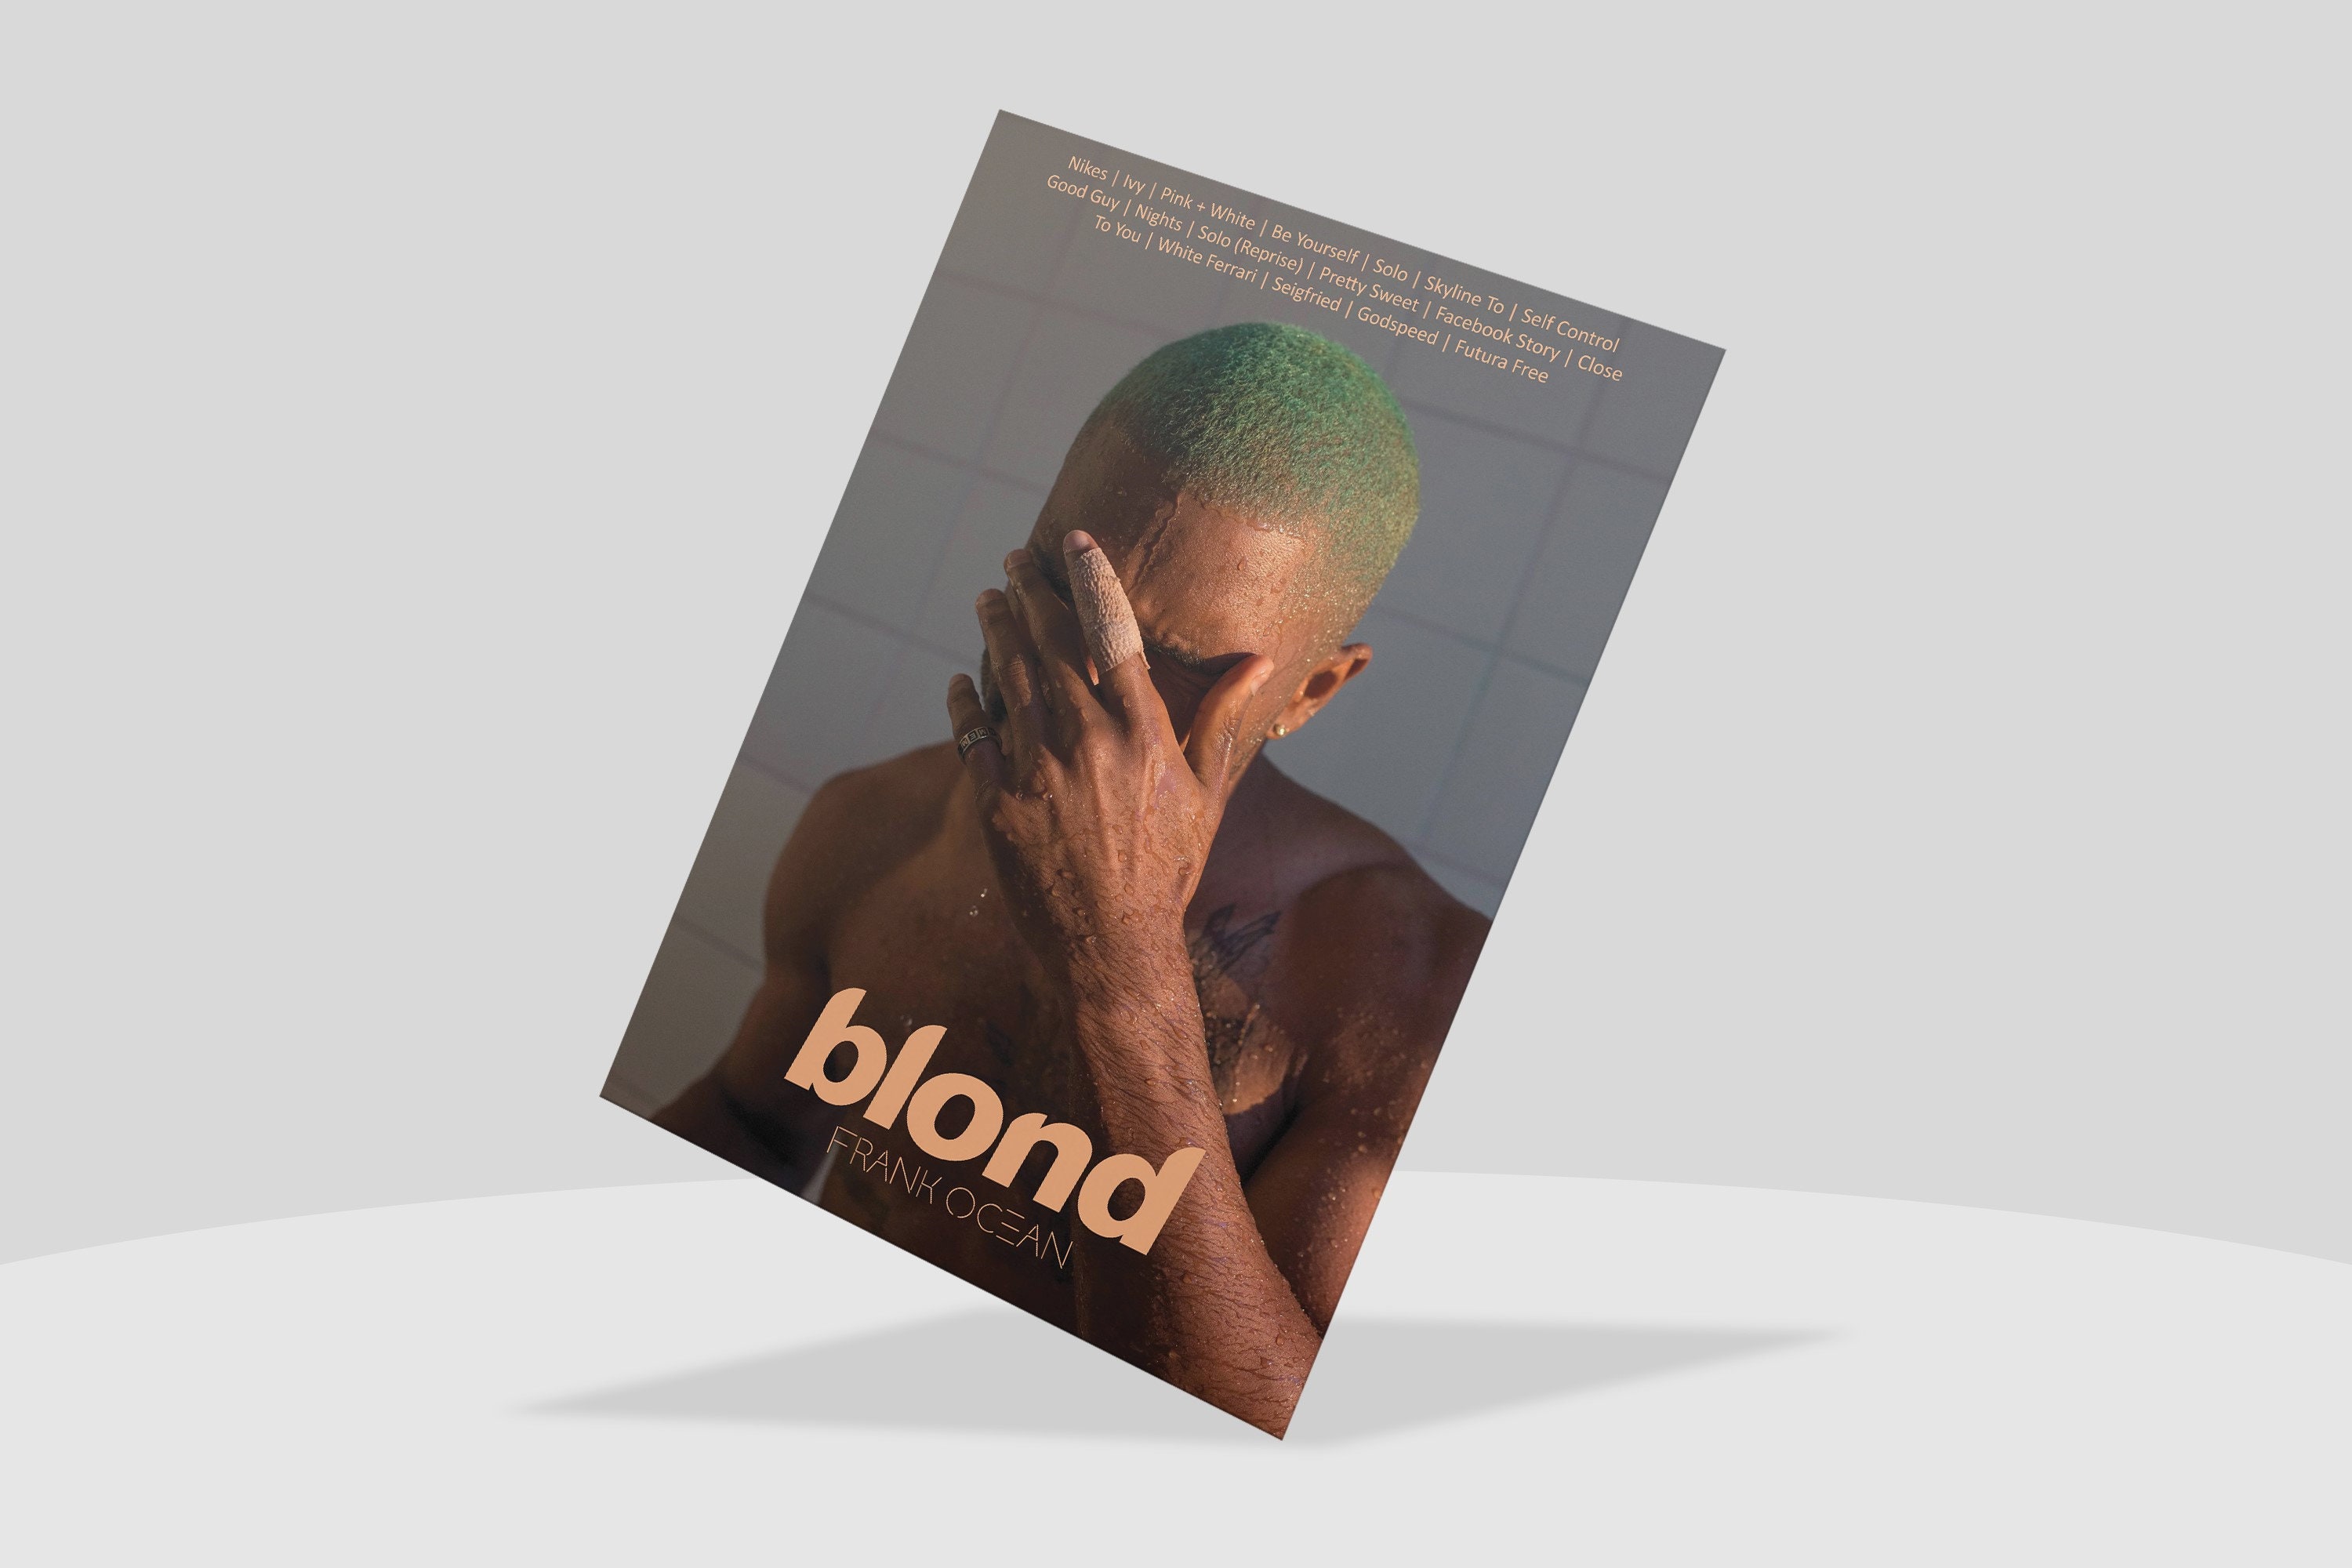 Discover Frank Ocean Poster Print| Blonde (Blond) Album Cover Poster Print , Spotify Blonde Poster, Wall Art, Home Decor, Music Gifts, Music Print